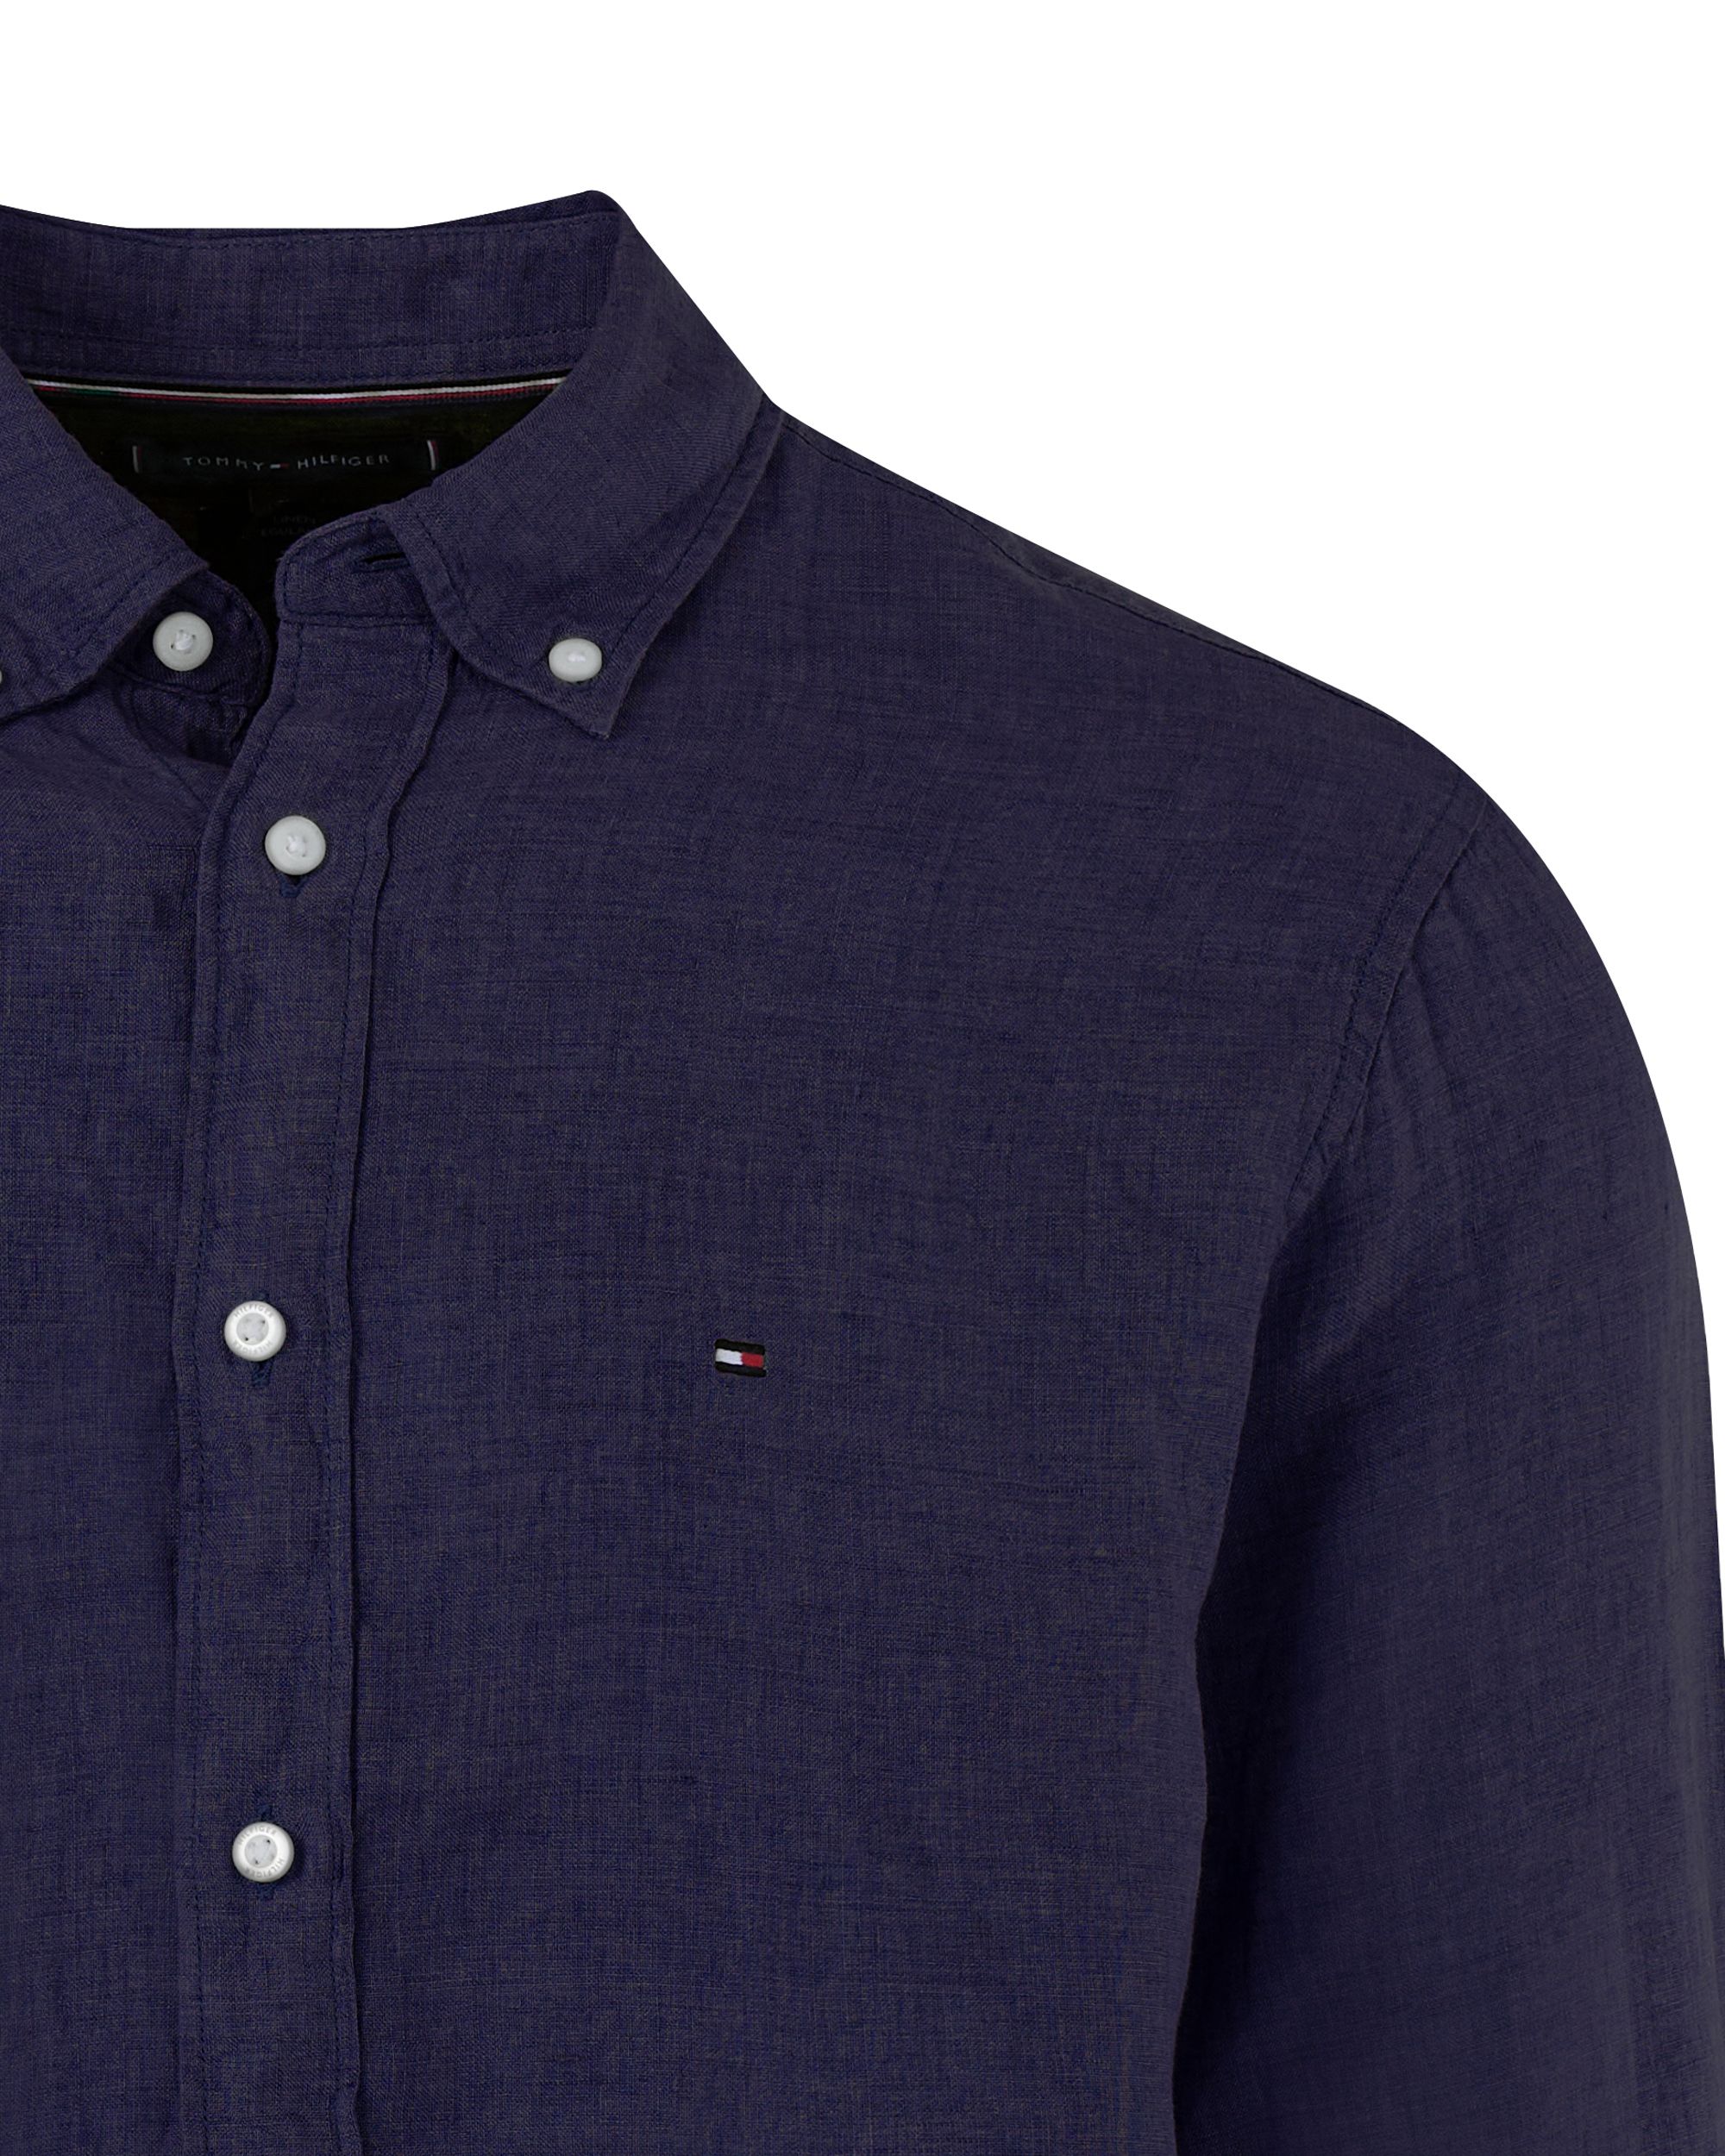 Tommy Hilfiger Menswear Casual Overhemd LM Donker blauw 094644-001-L